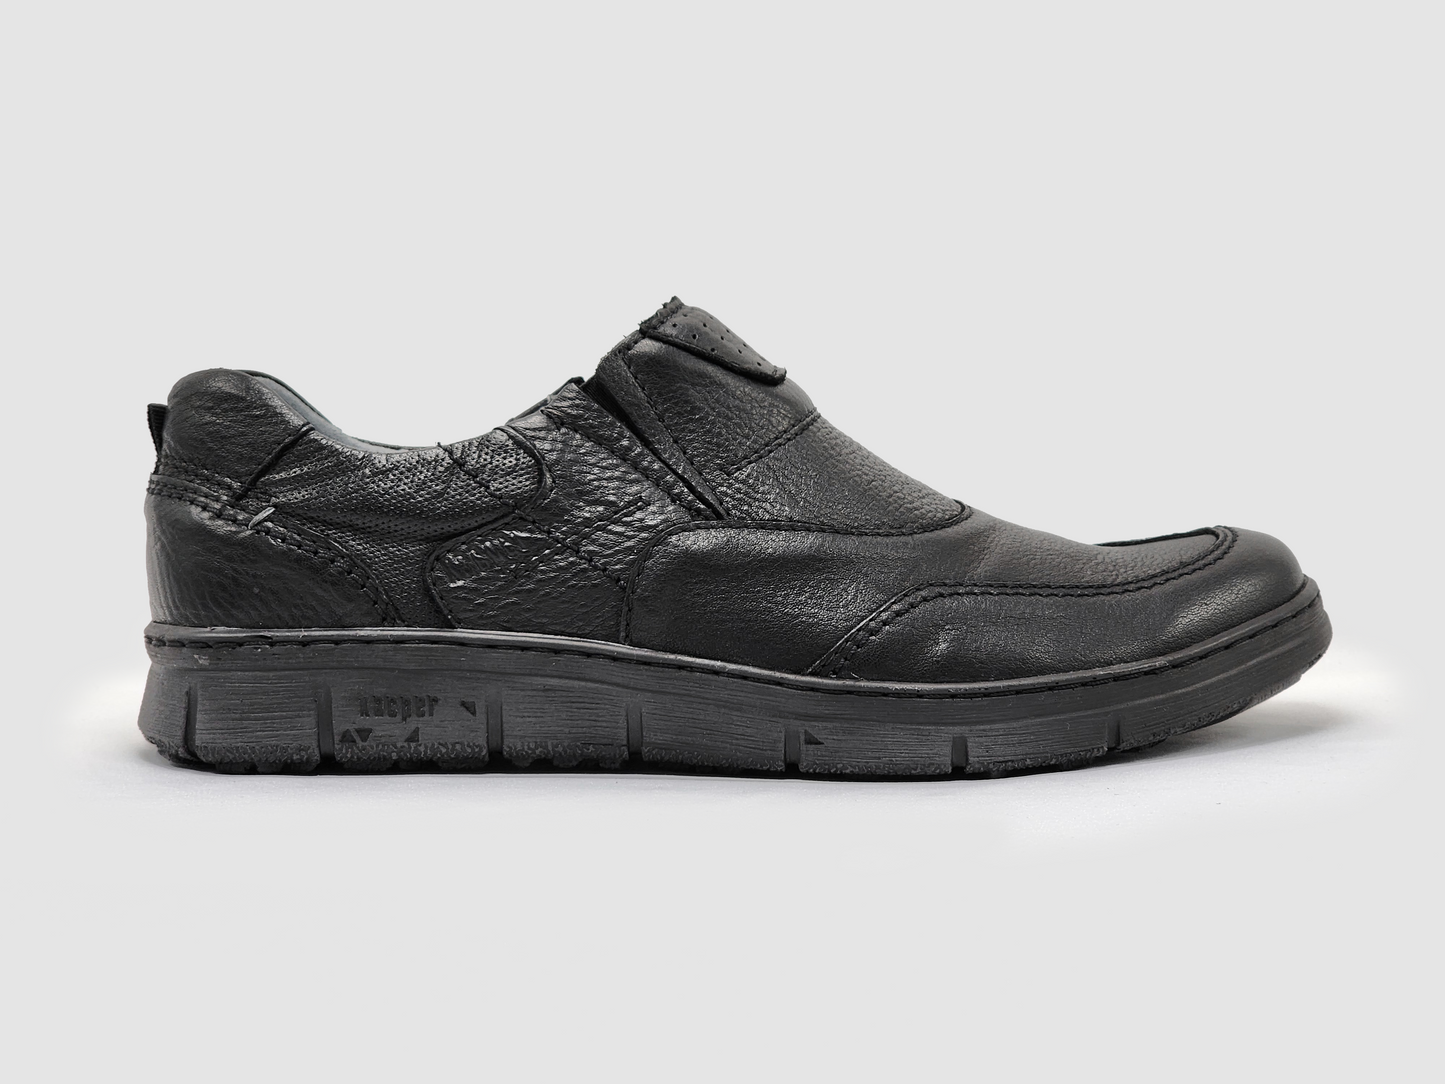 Men's Everyday Slip-On Leather Shoes - Black - Kacper Global Shoes 